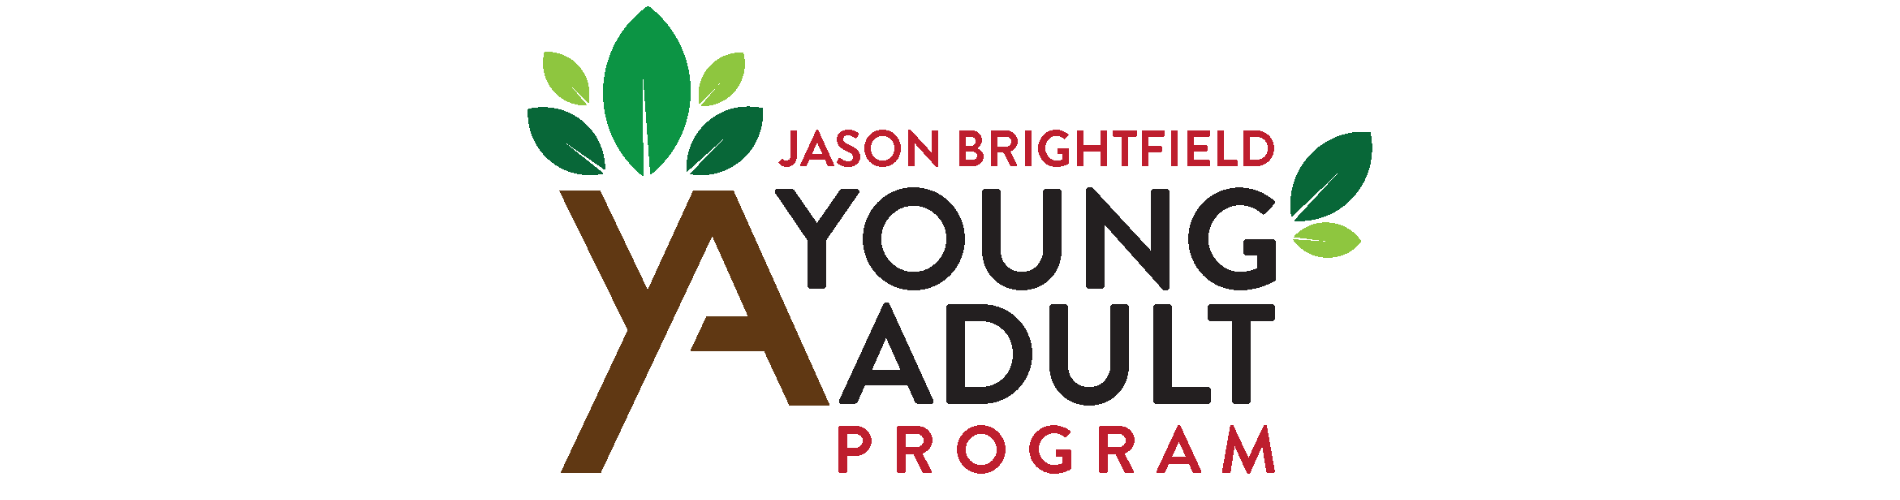 Jason Brightfield Young Adult Program